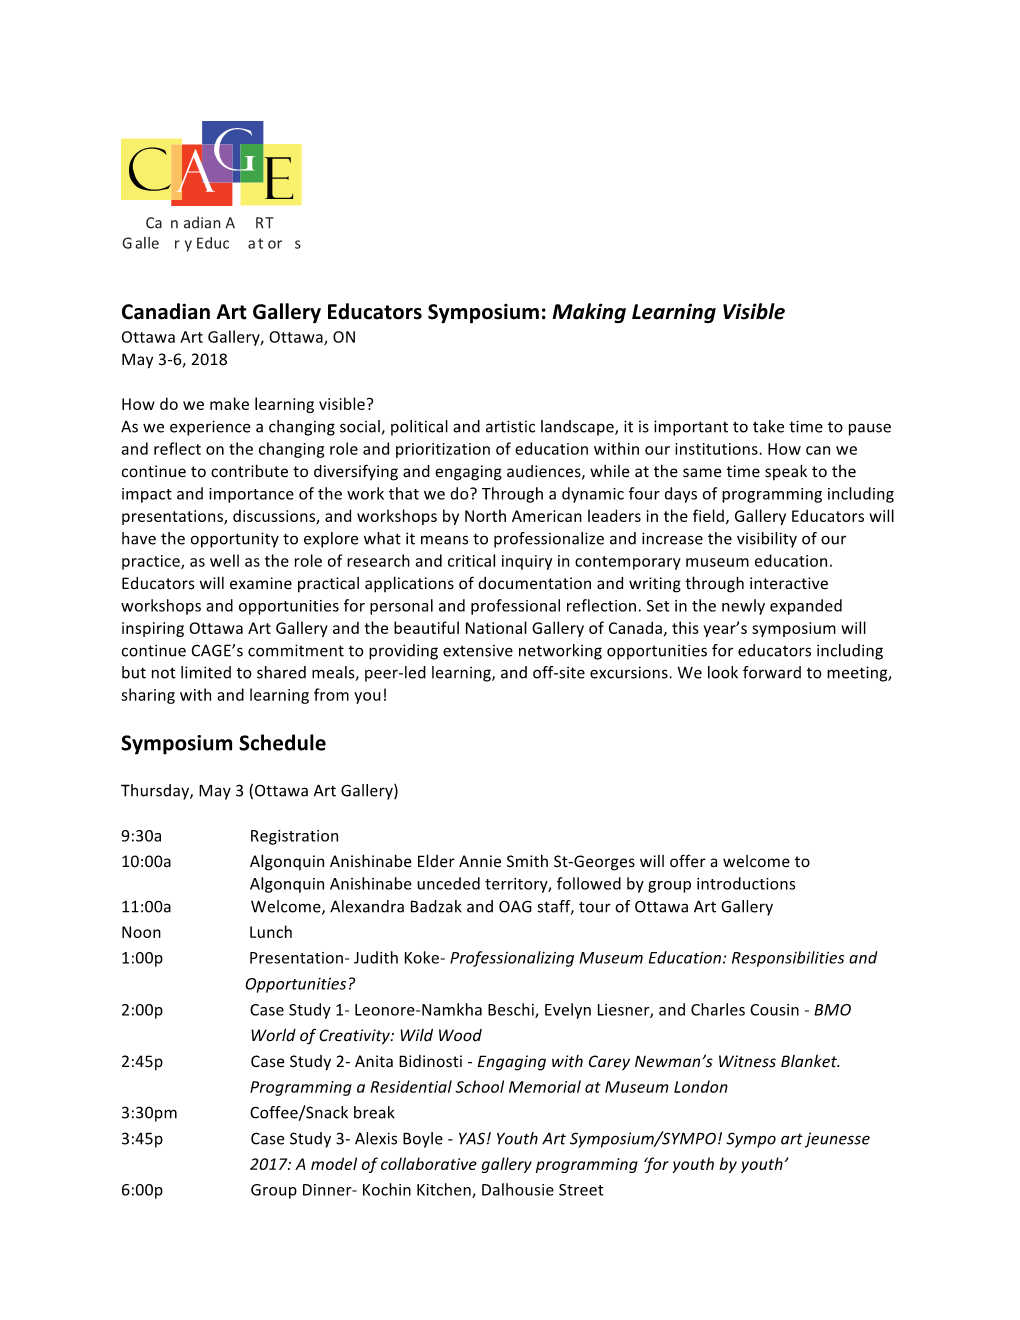 Canadian Art Gallery Educators Symposium: Making Learning Visible Ottawa Art Gallery, Ottawa, on May 3-6, 2018